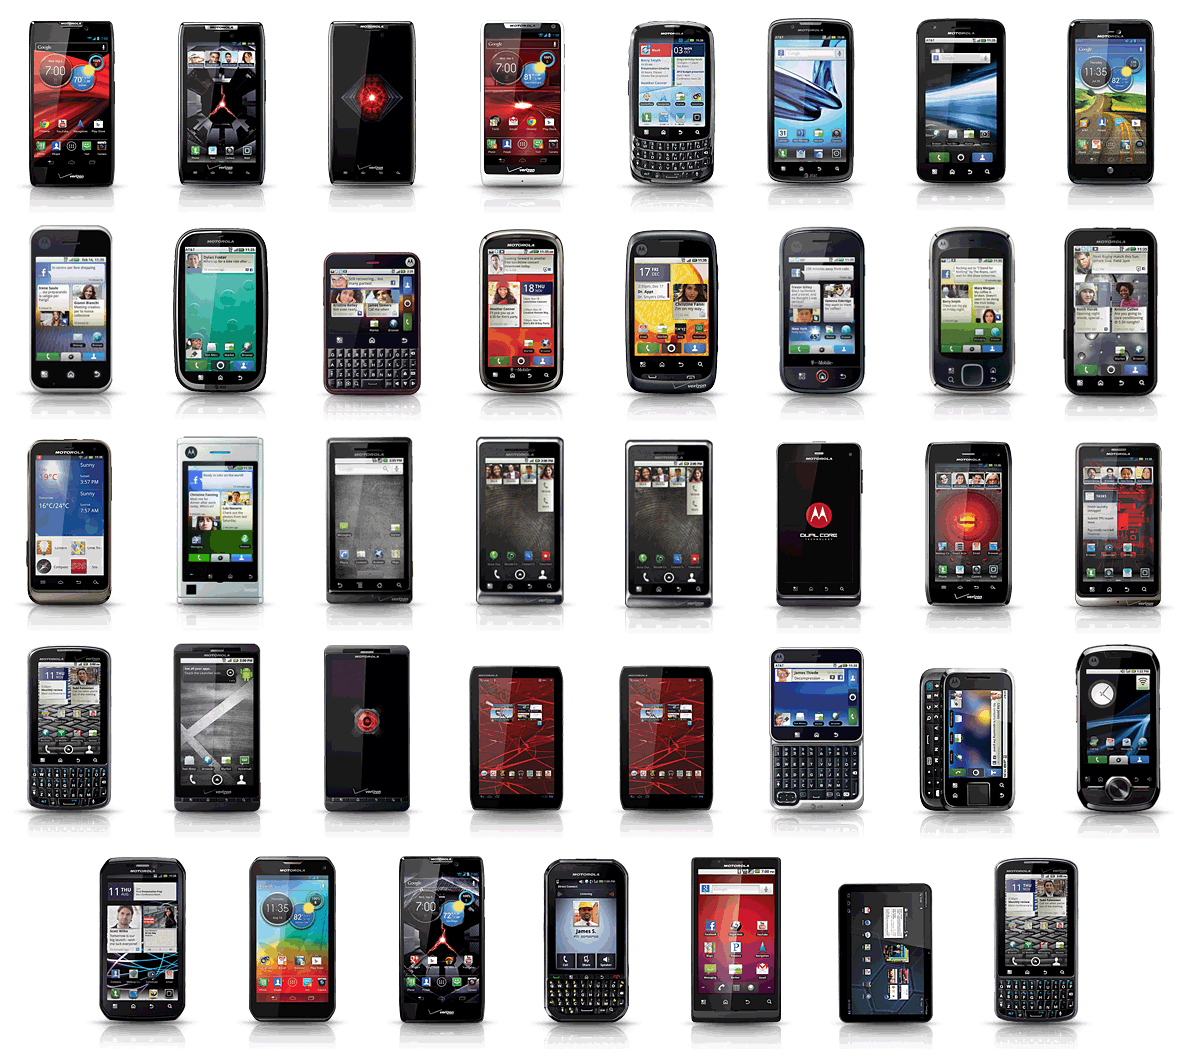 All Motorola phones